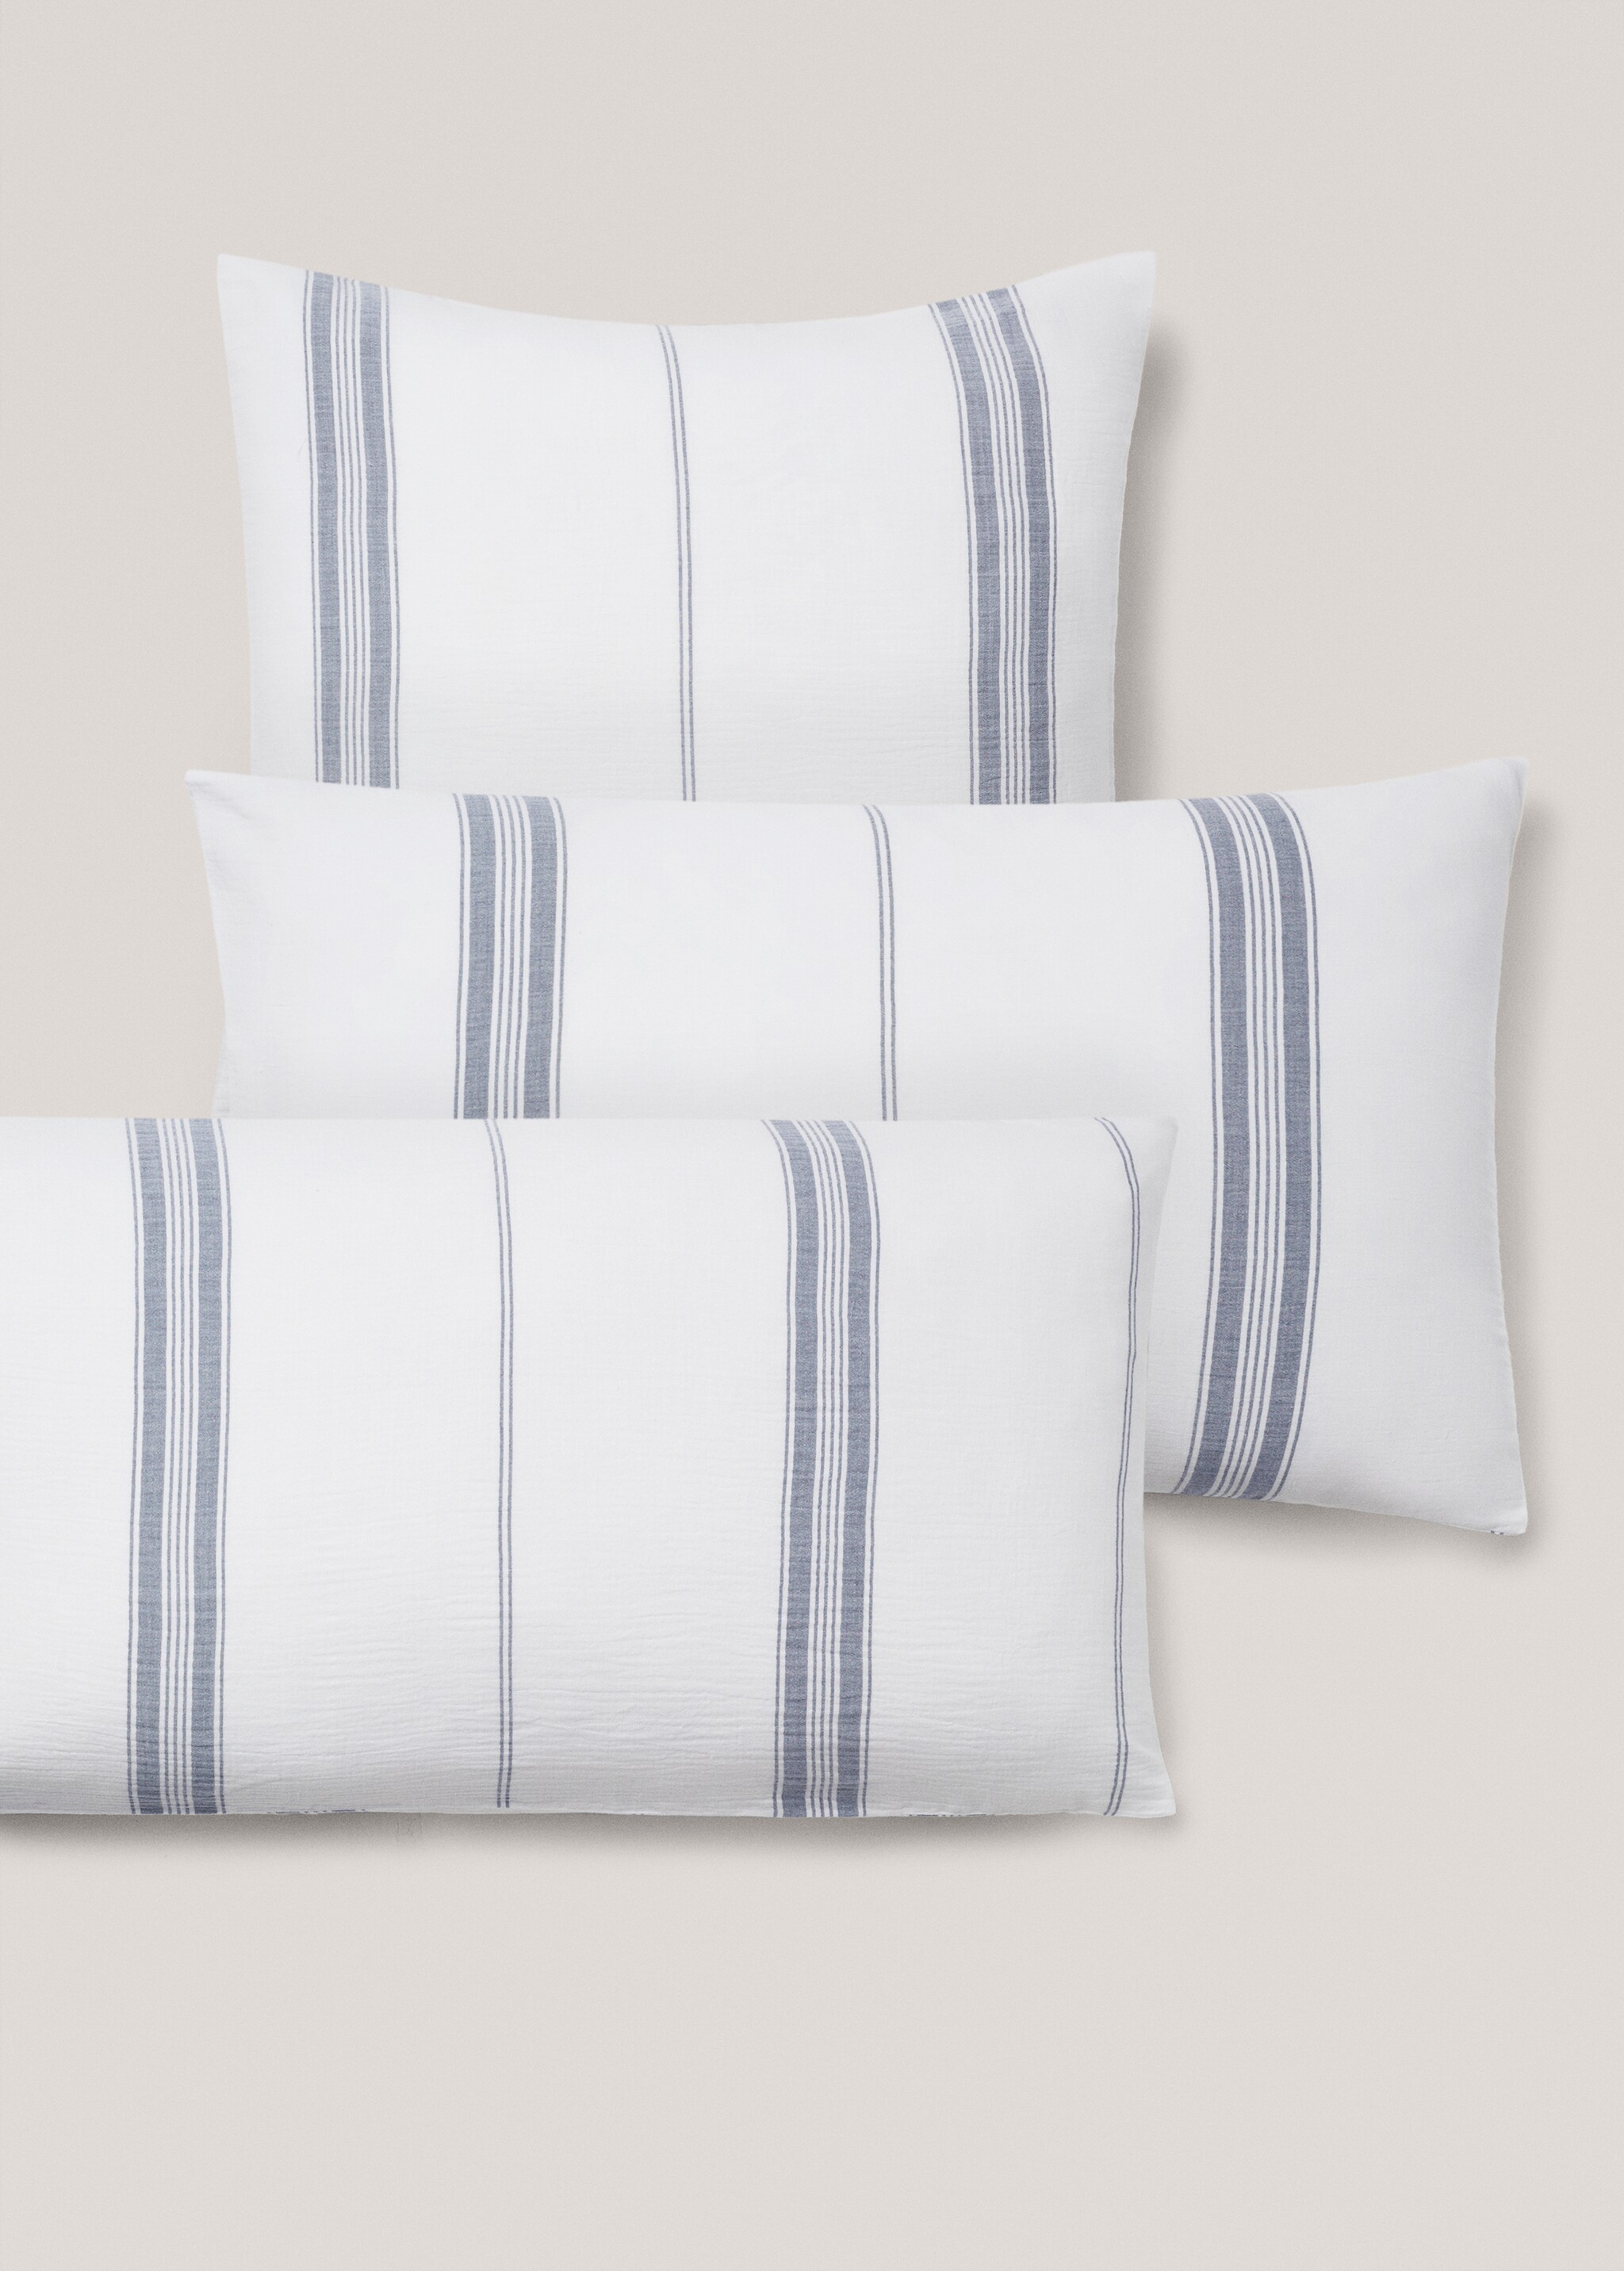 Texture striped cotton pillowcase 60x60cm - Details of the article 4